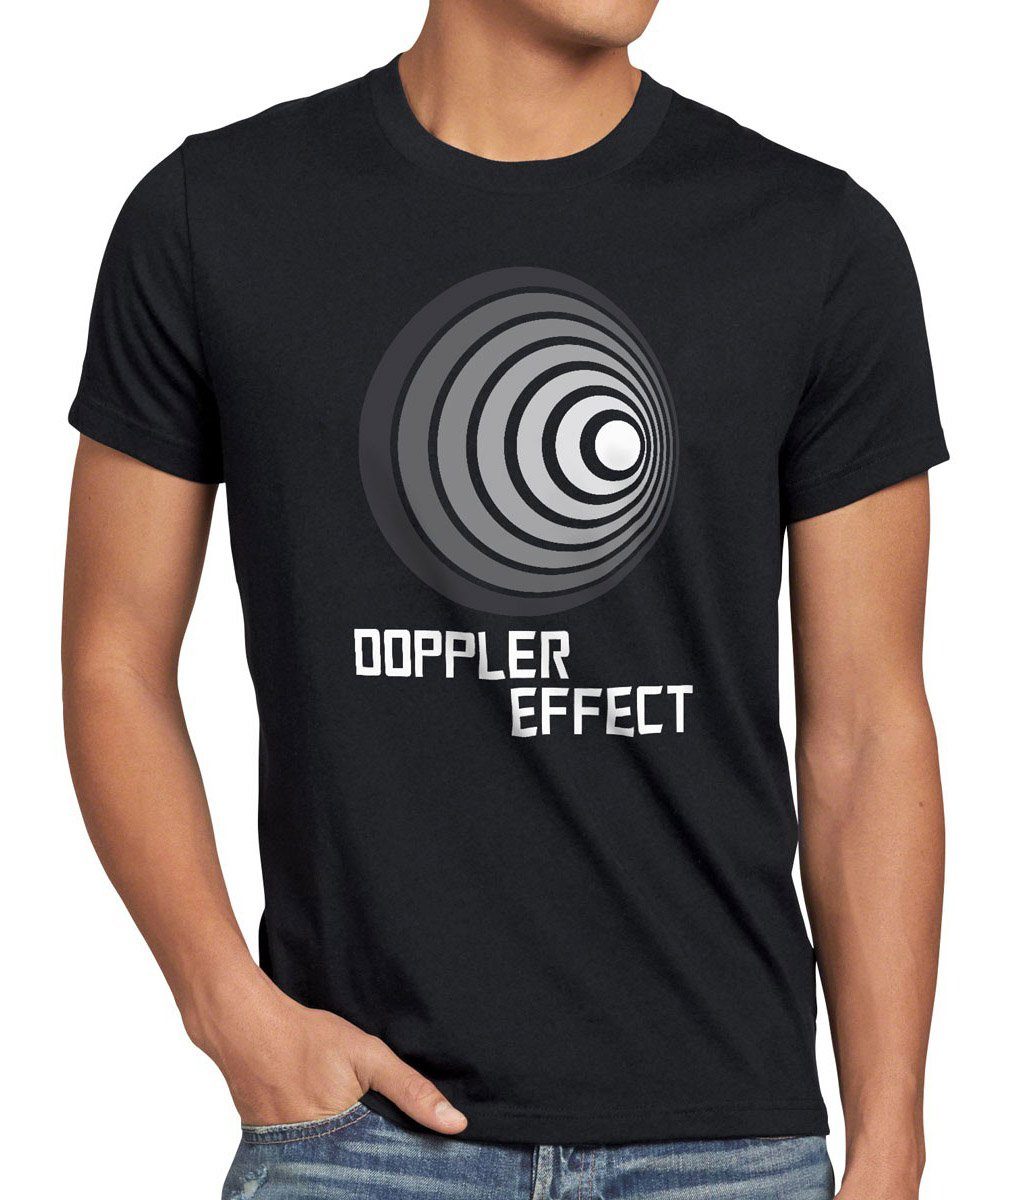 tbbt Herren Theory Bang Doppler Print-Shirt style3 Big Sheldon Cooper schwarz Effect Schall Effekt T-Shirt